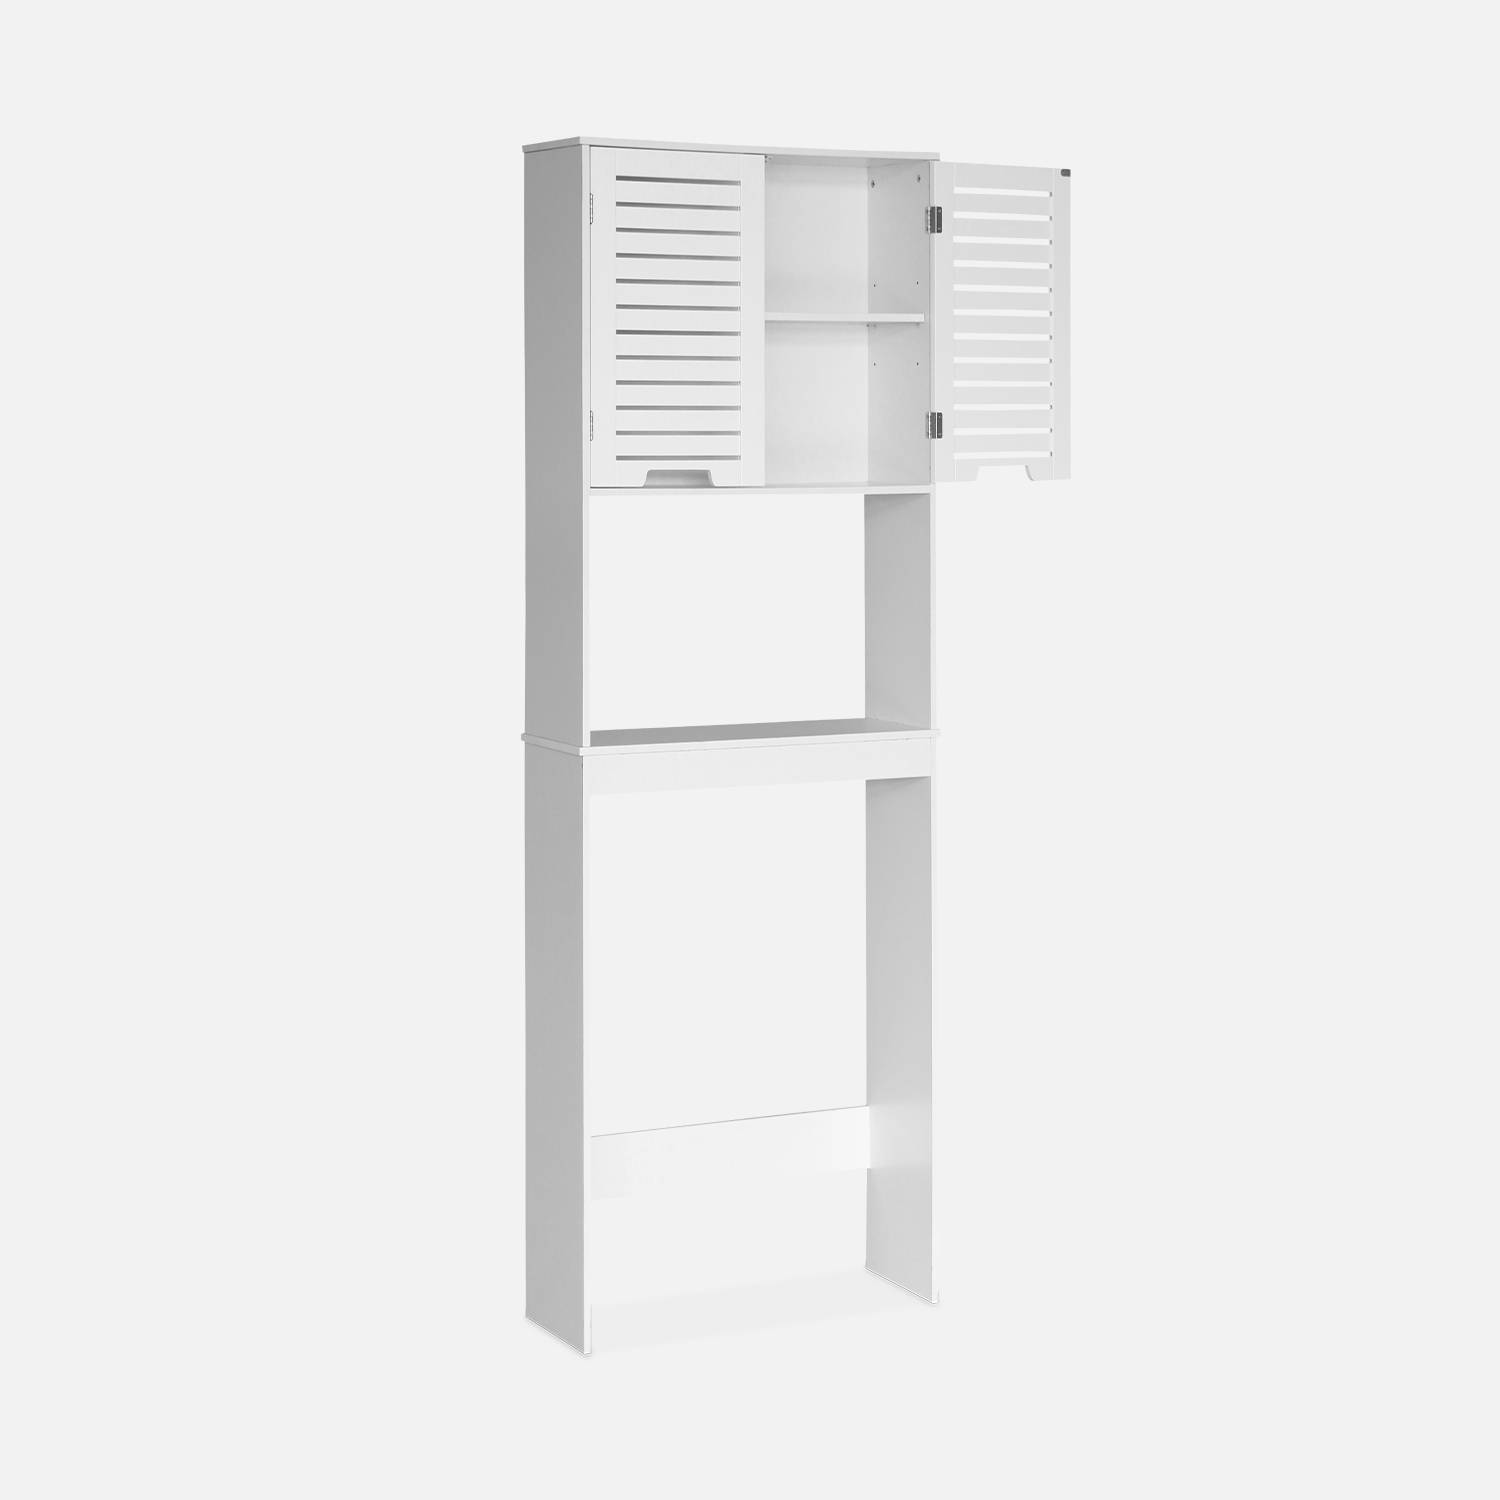 WC shelf/cabinet, bathroom furniture, white Photo2